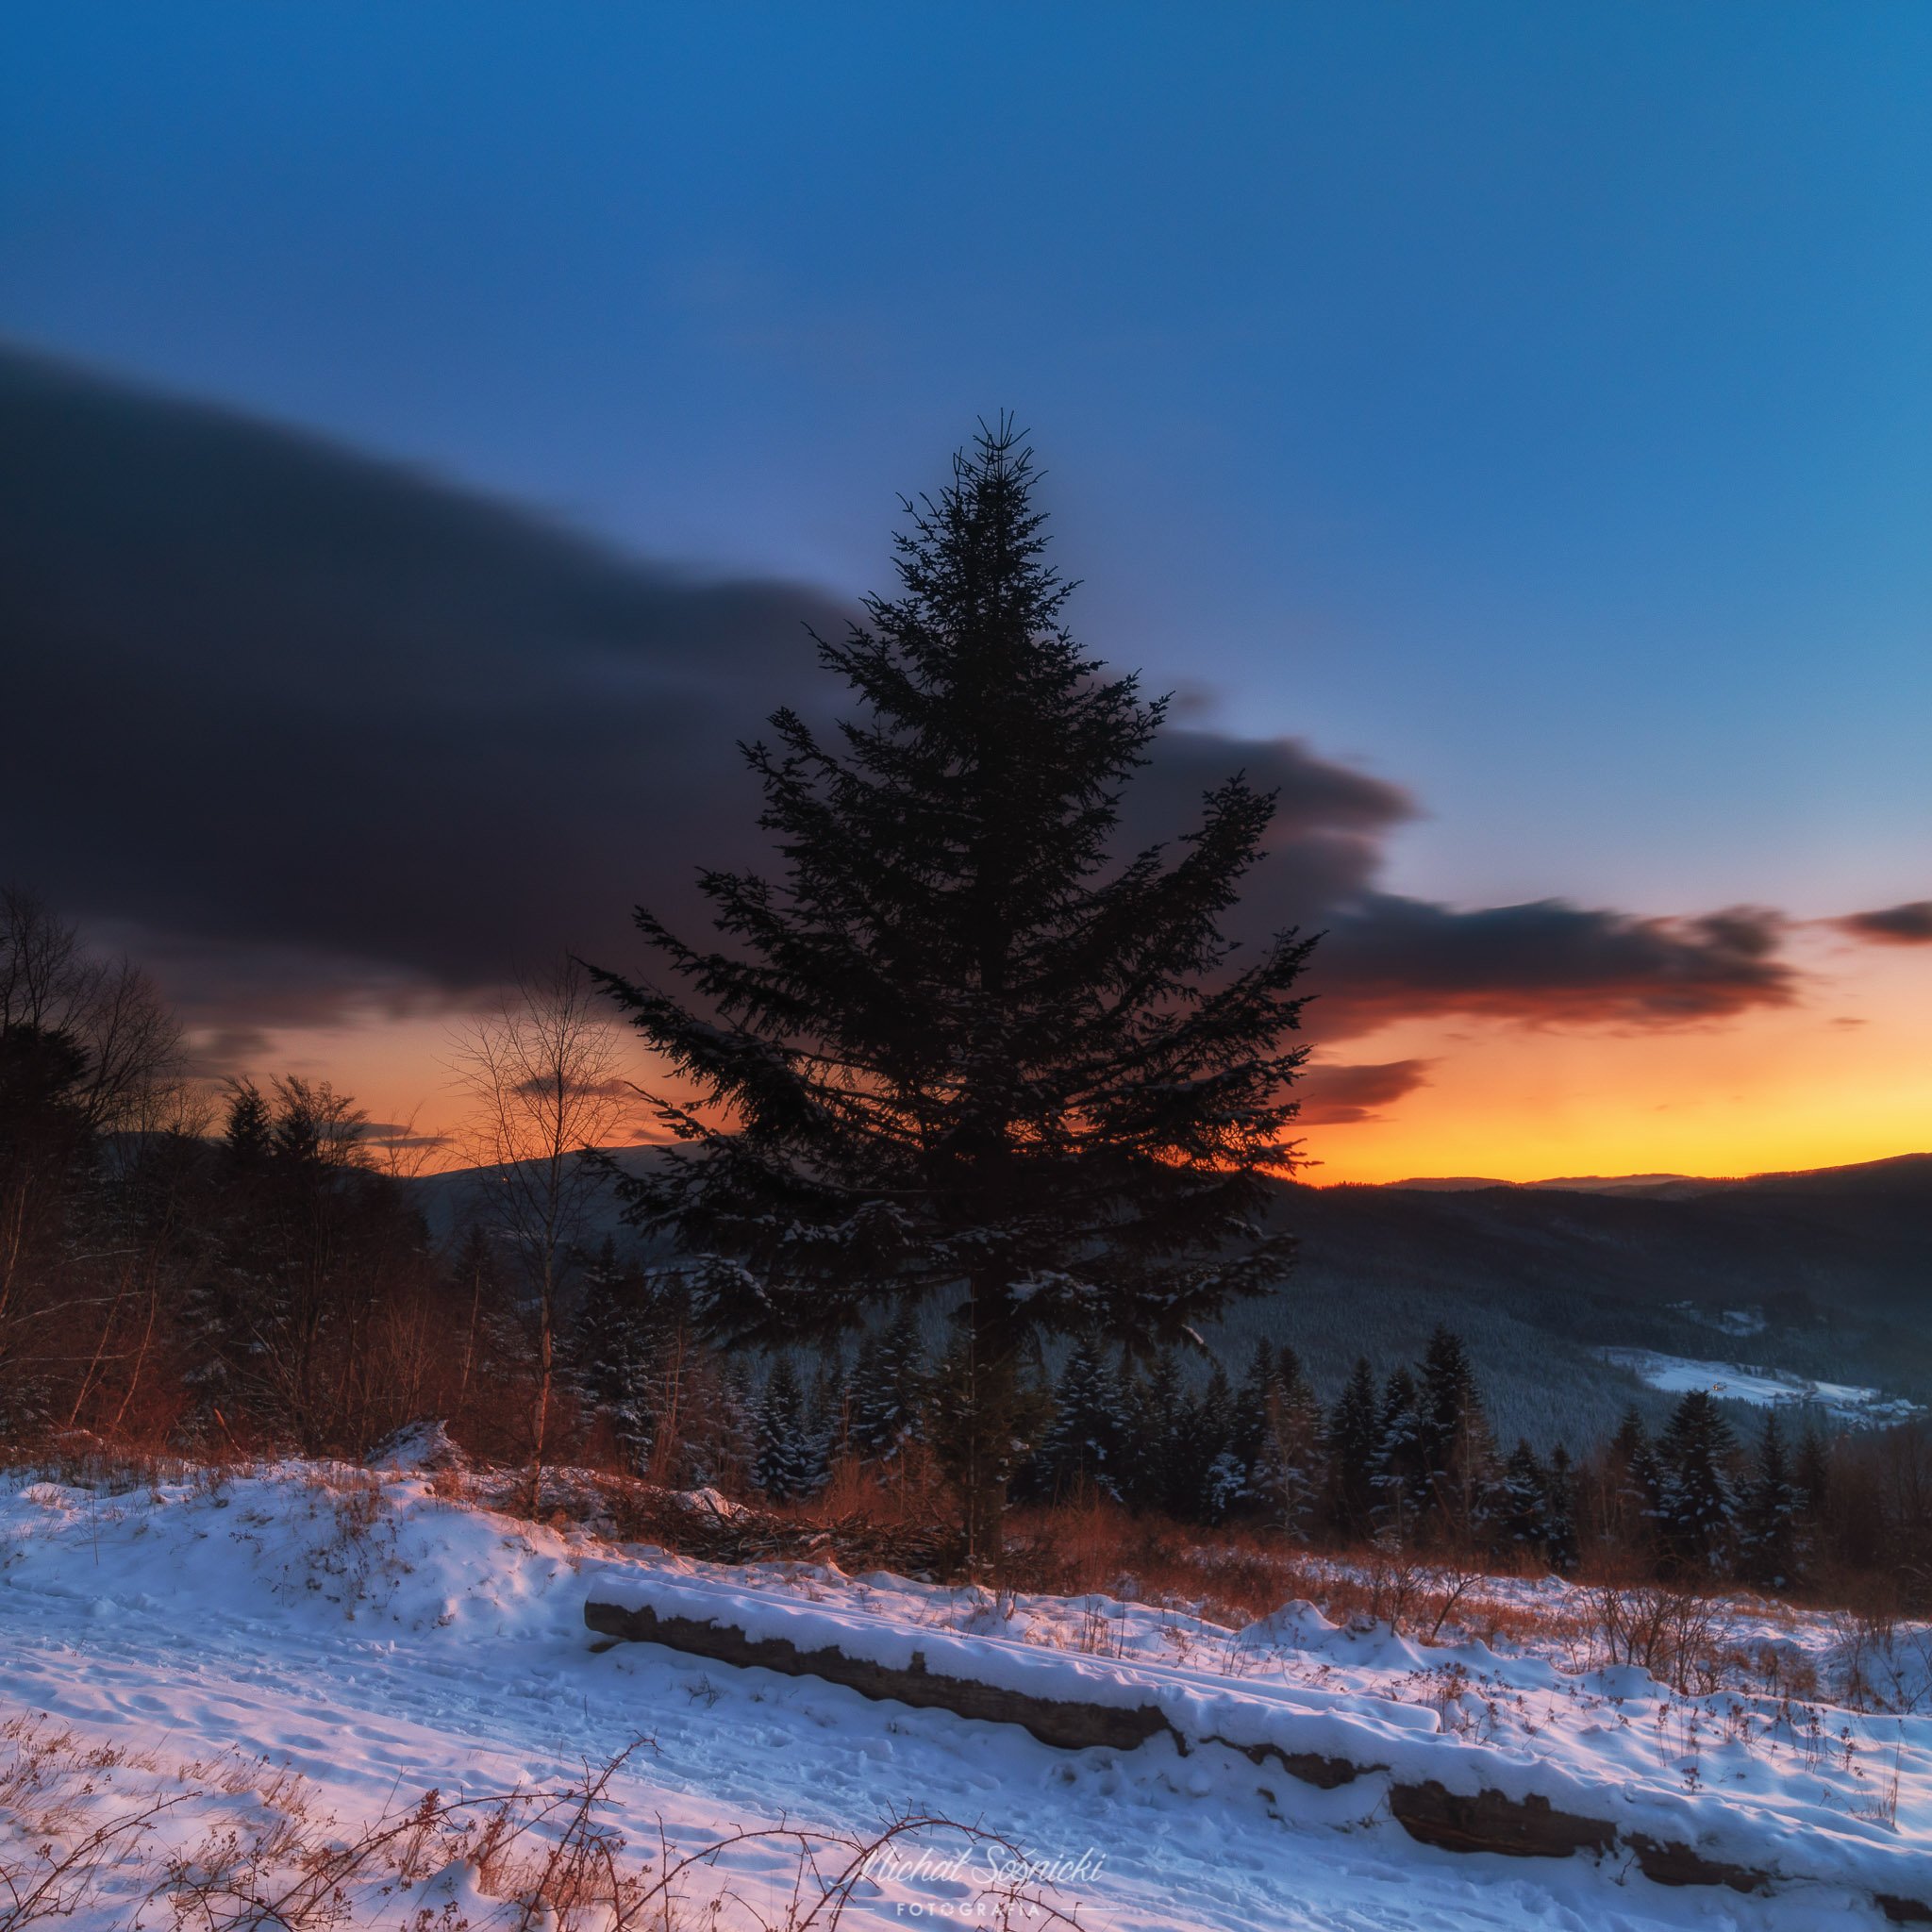 #poland #benro #benq #haida #winter #snow #tree #nature #sunset, Michał Sośnicki